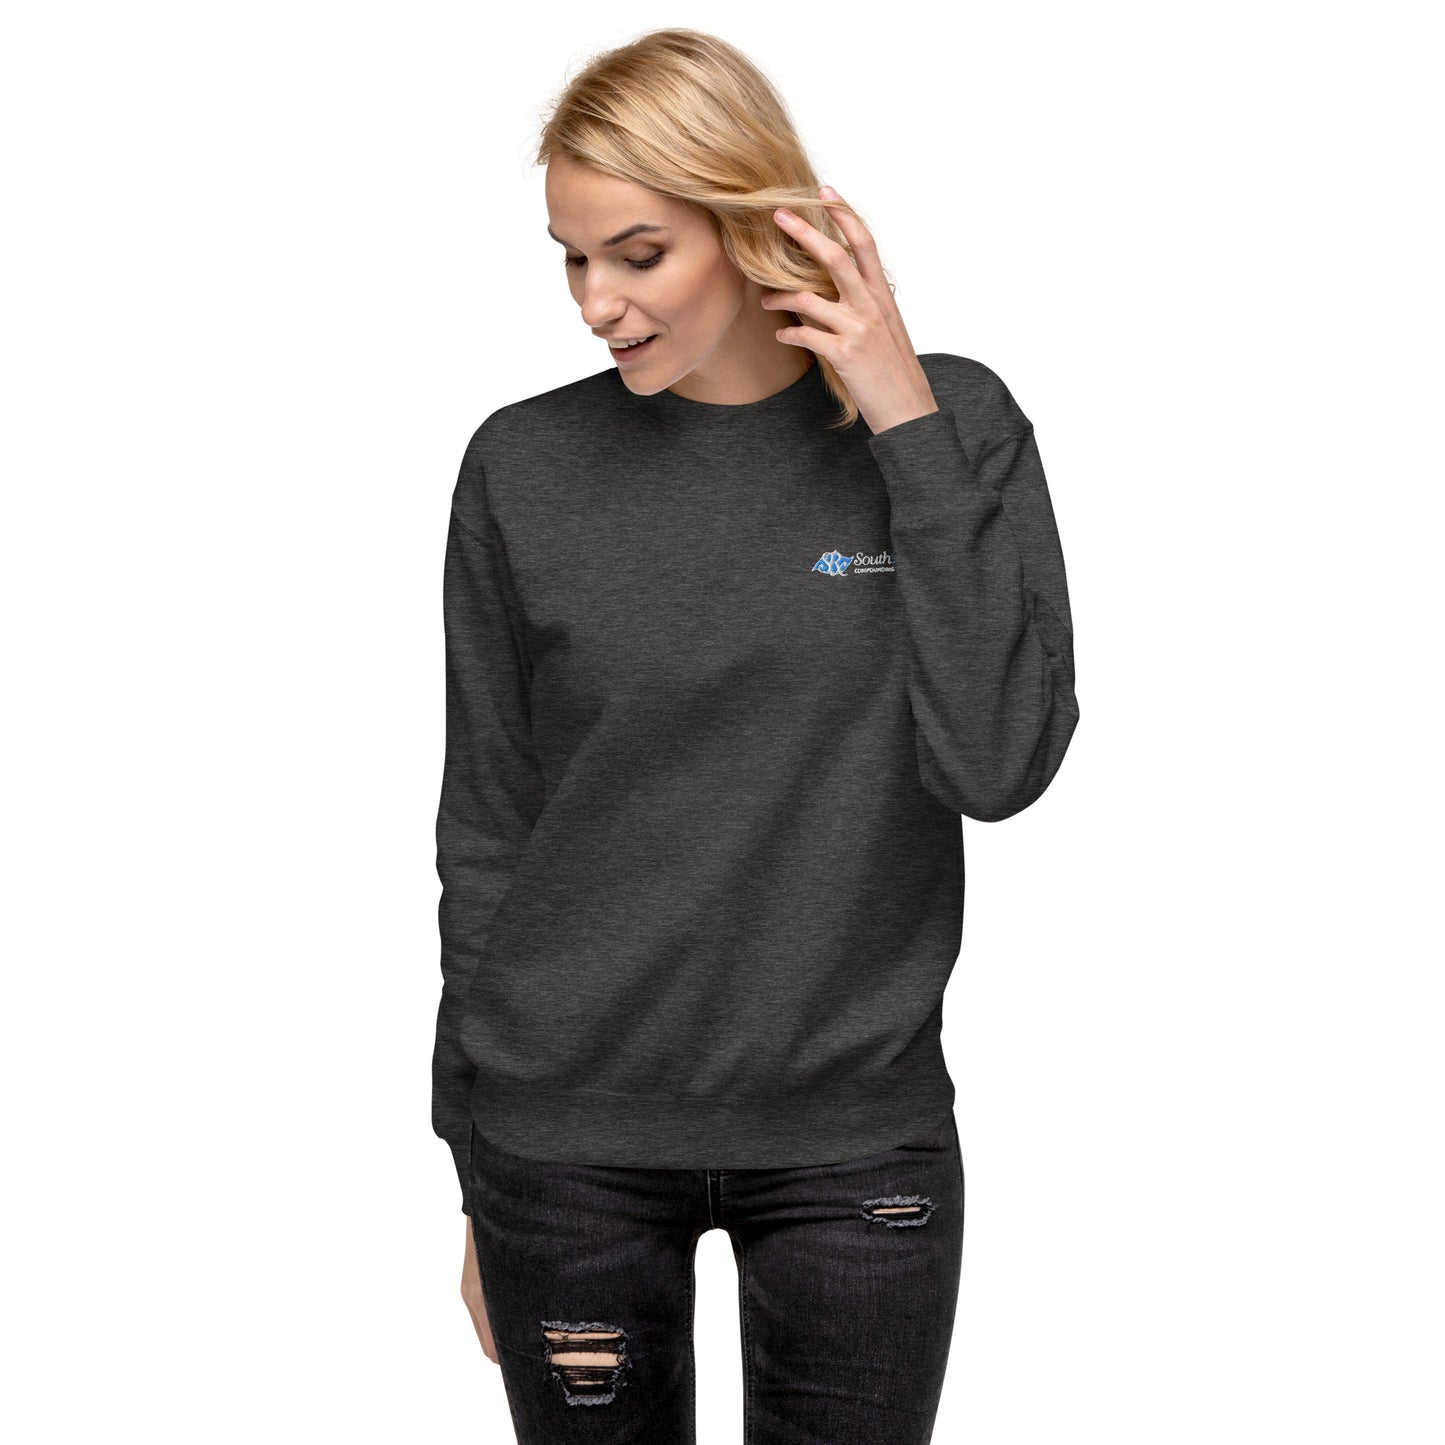 Unisex Premium Sweatshirt (fitted cut) - South River